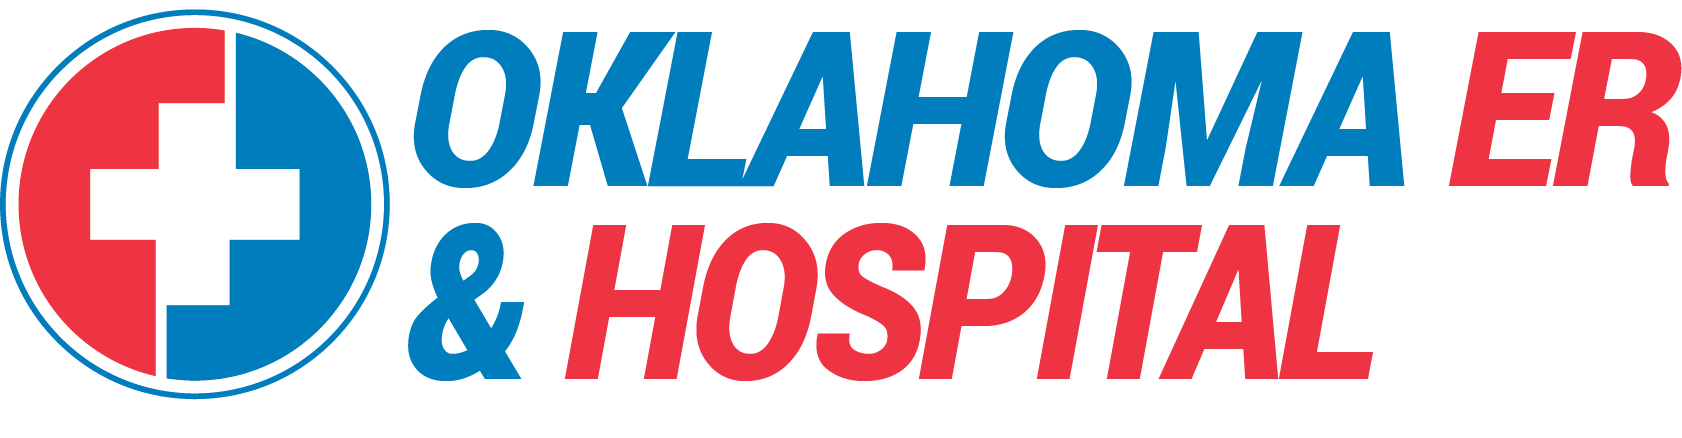 Oklahoma ER & Hospital logo